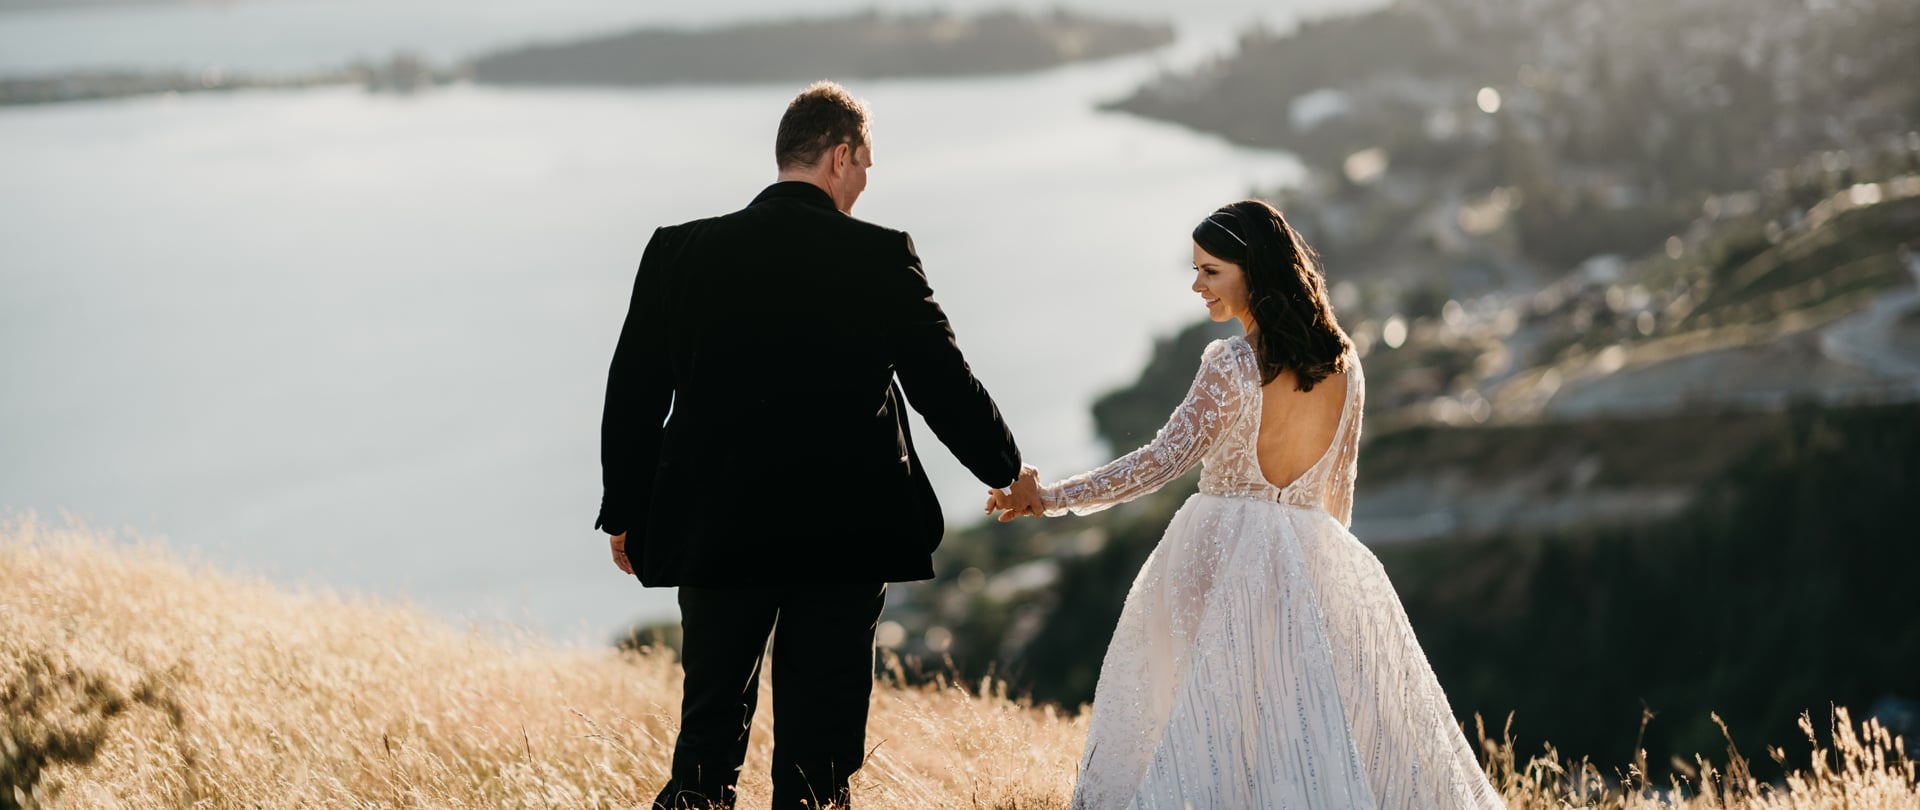 Jess & Ryan Wedding Video Filmed atQueenstown,New Zealand